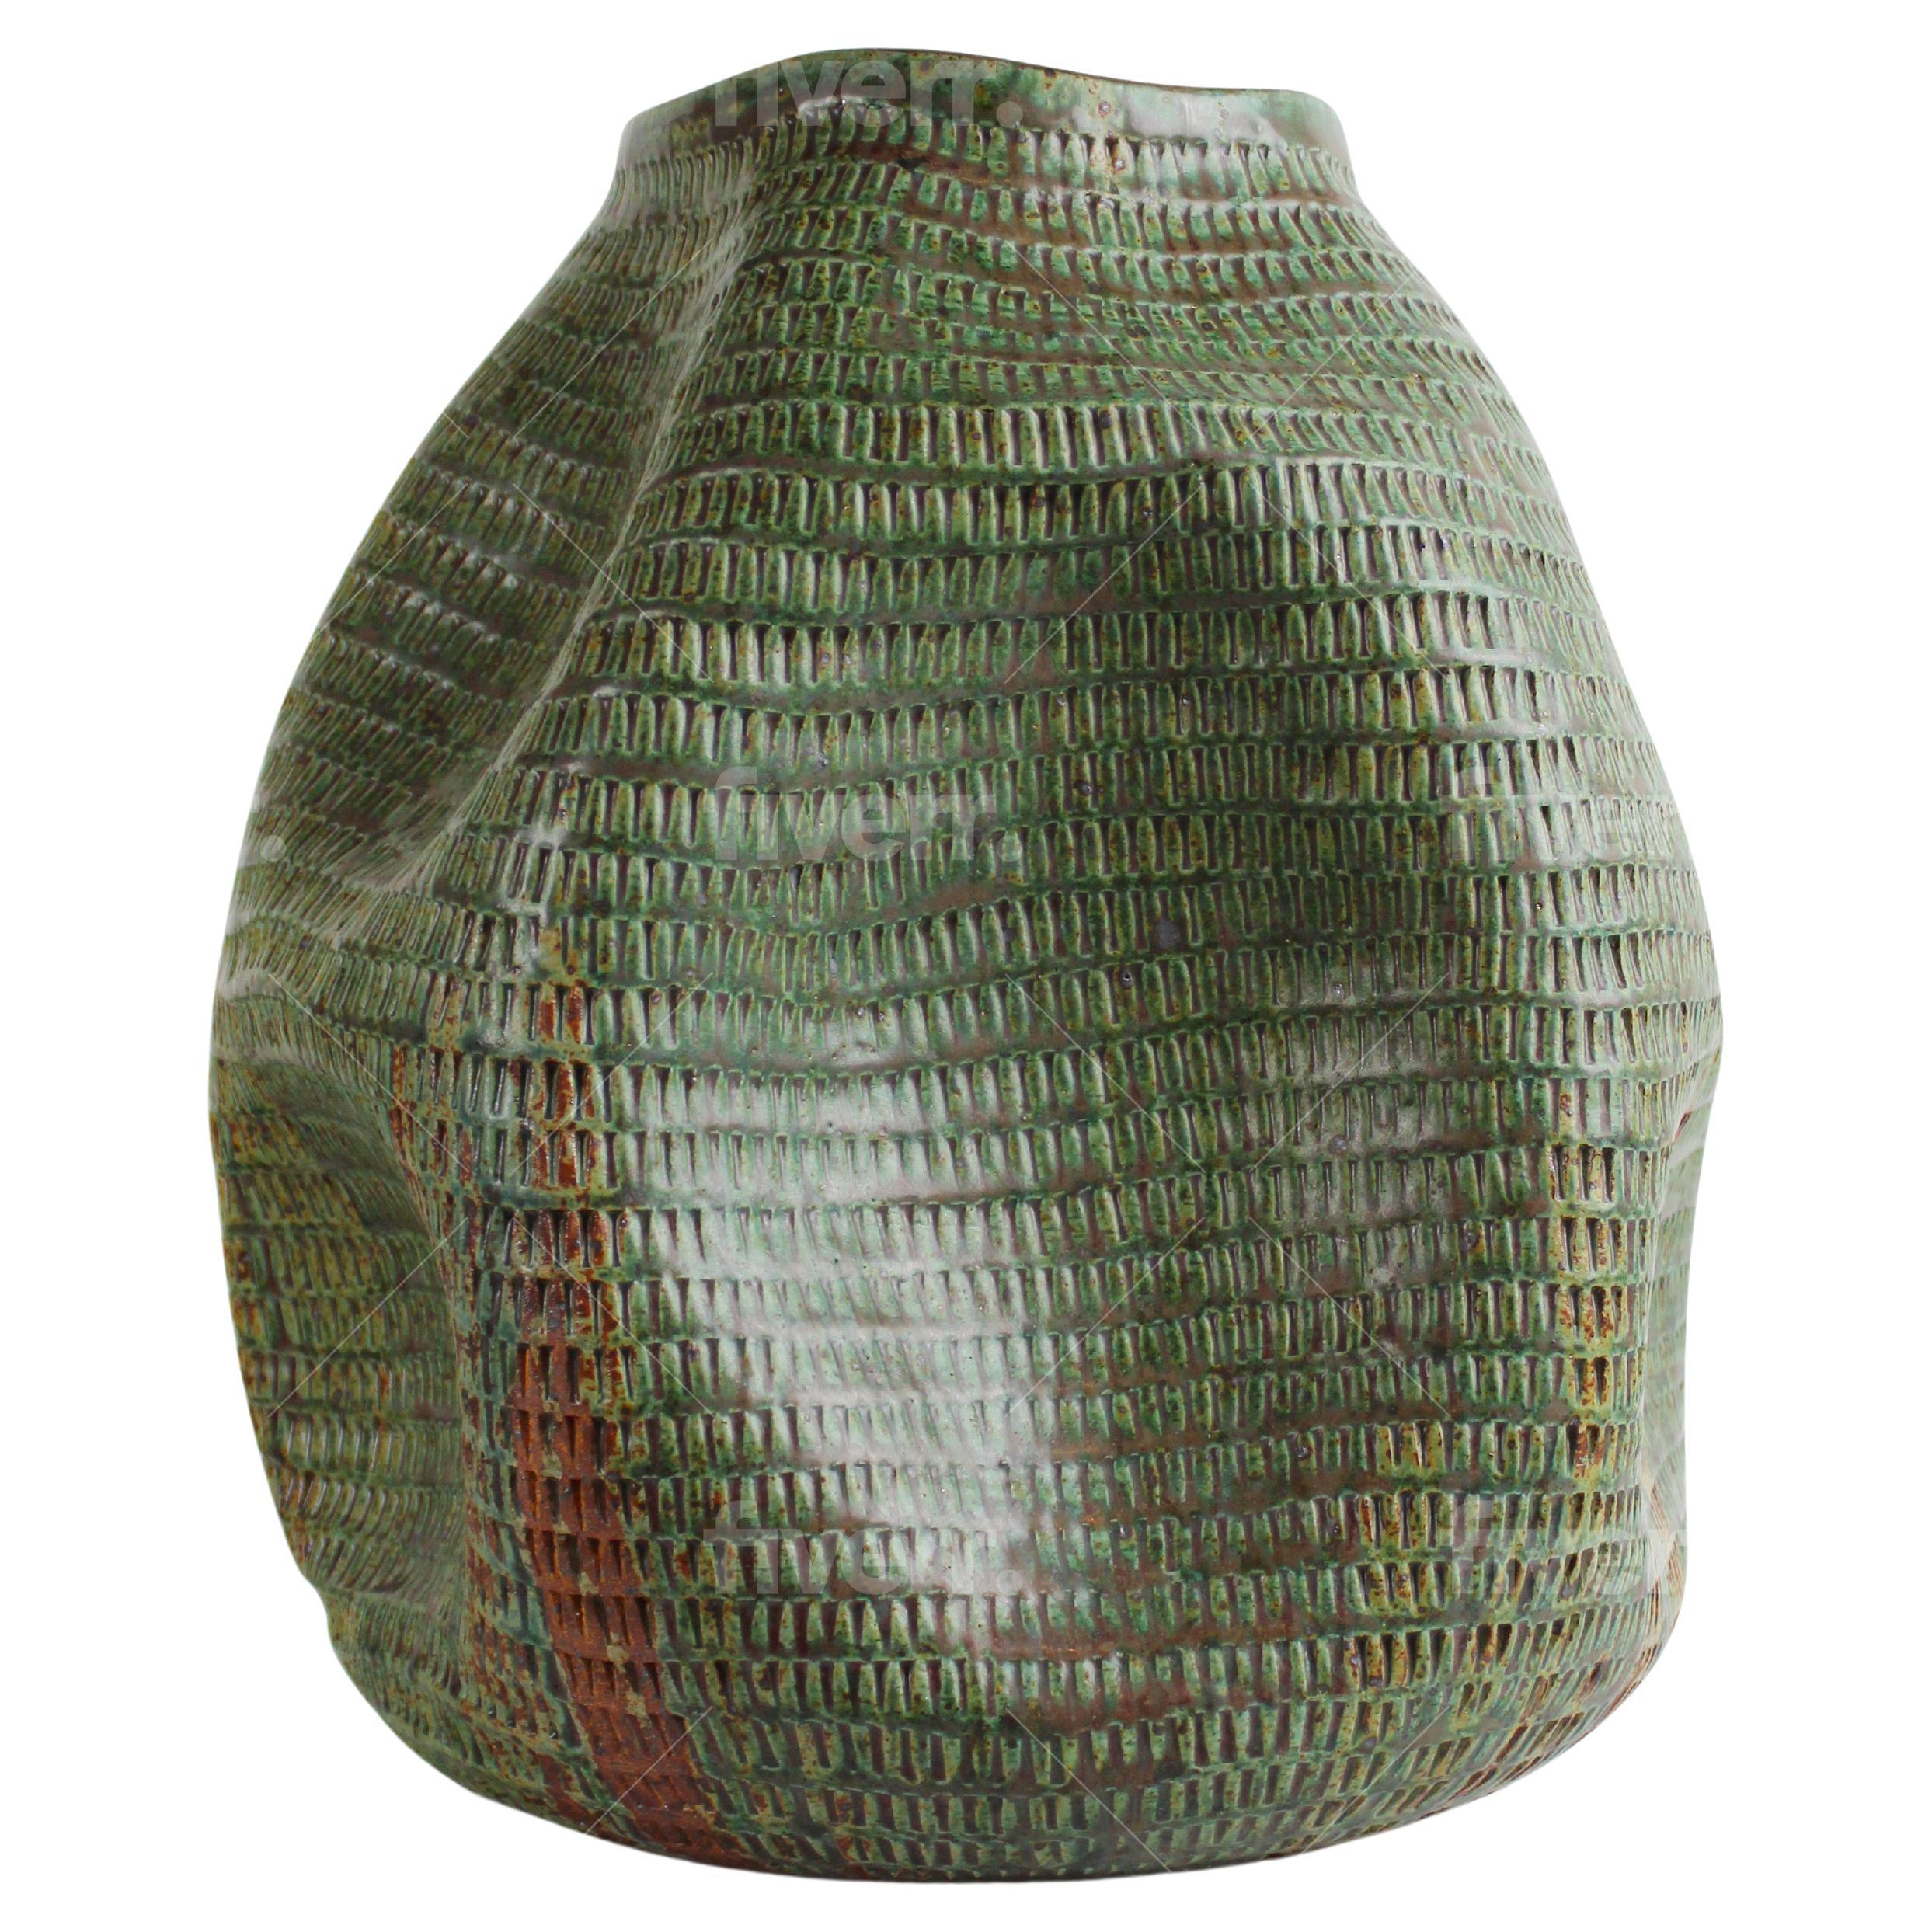 Skoby Joe Handmade Green Ceramic Vase Mid-Century Modern Vessel